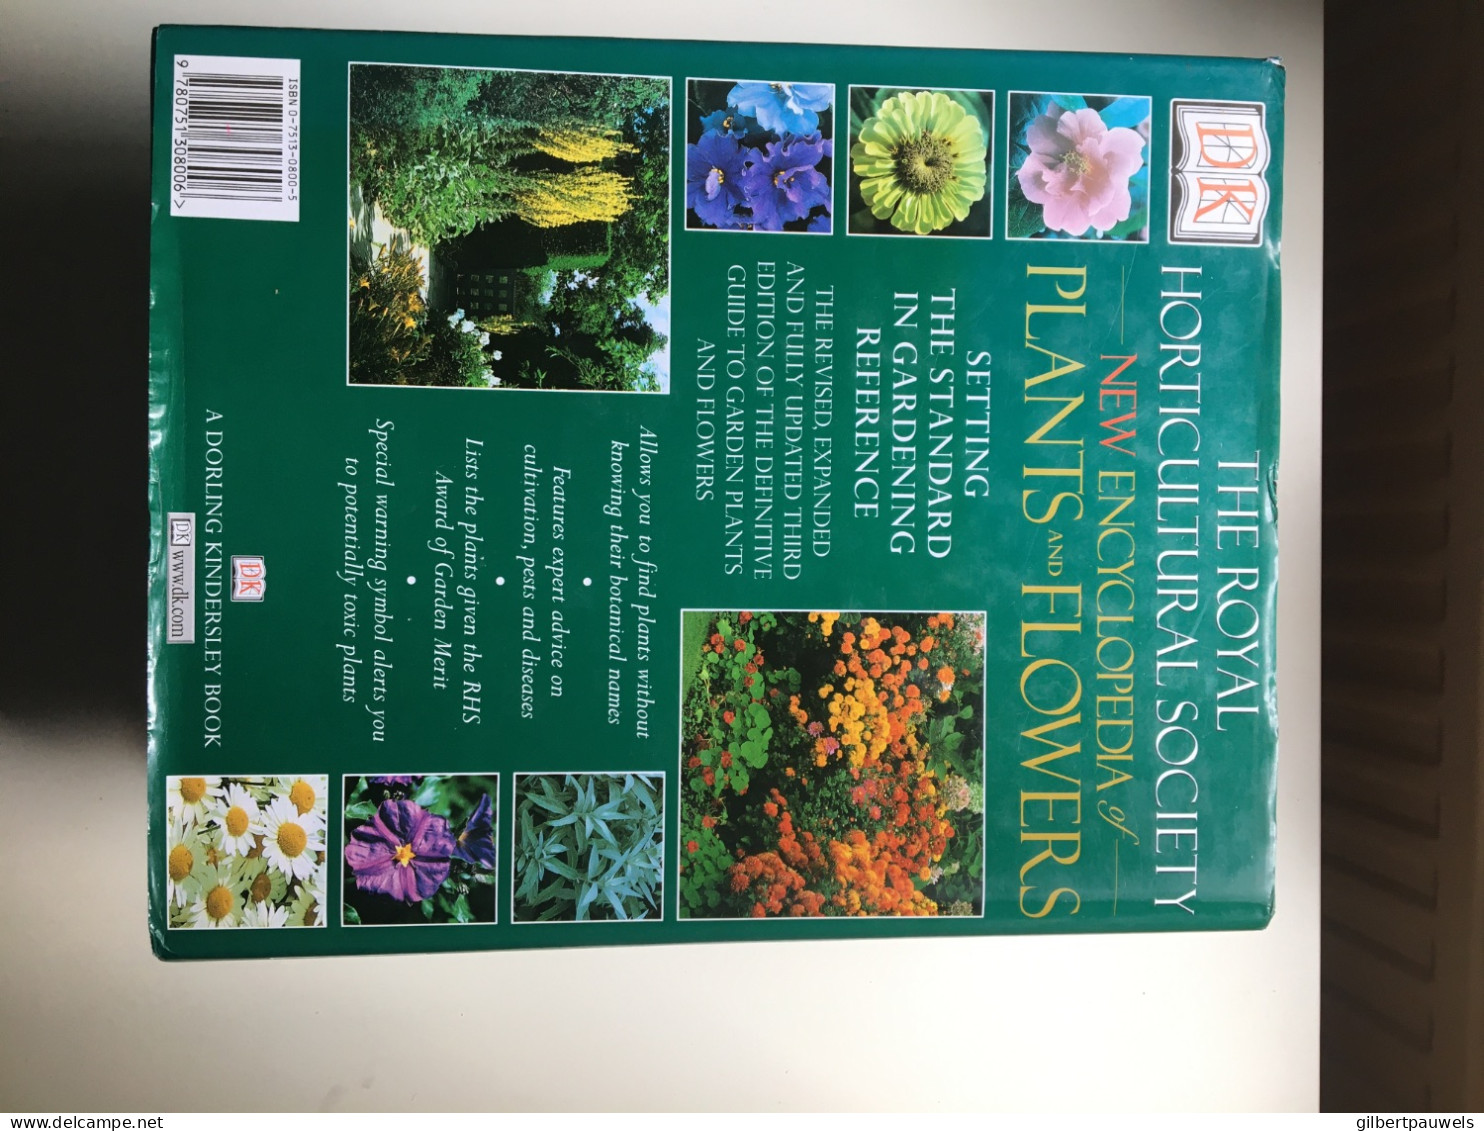 Encyclopedie Of Plants And Flowers - Gardening